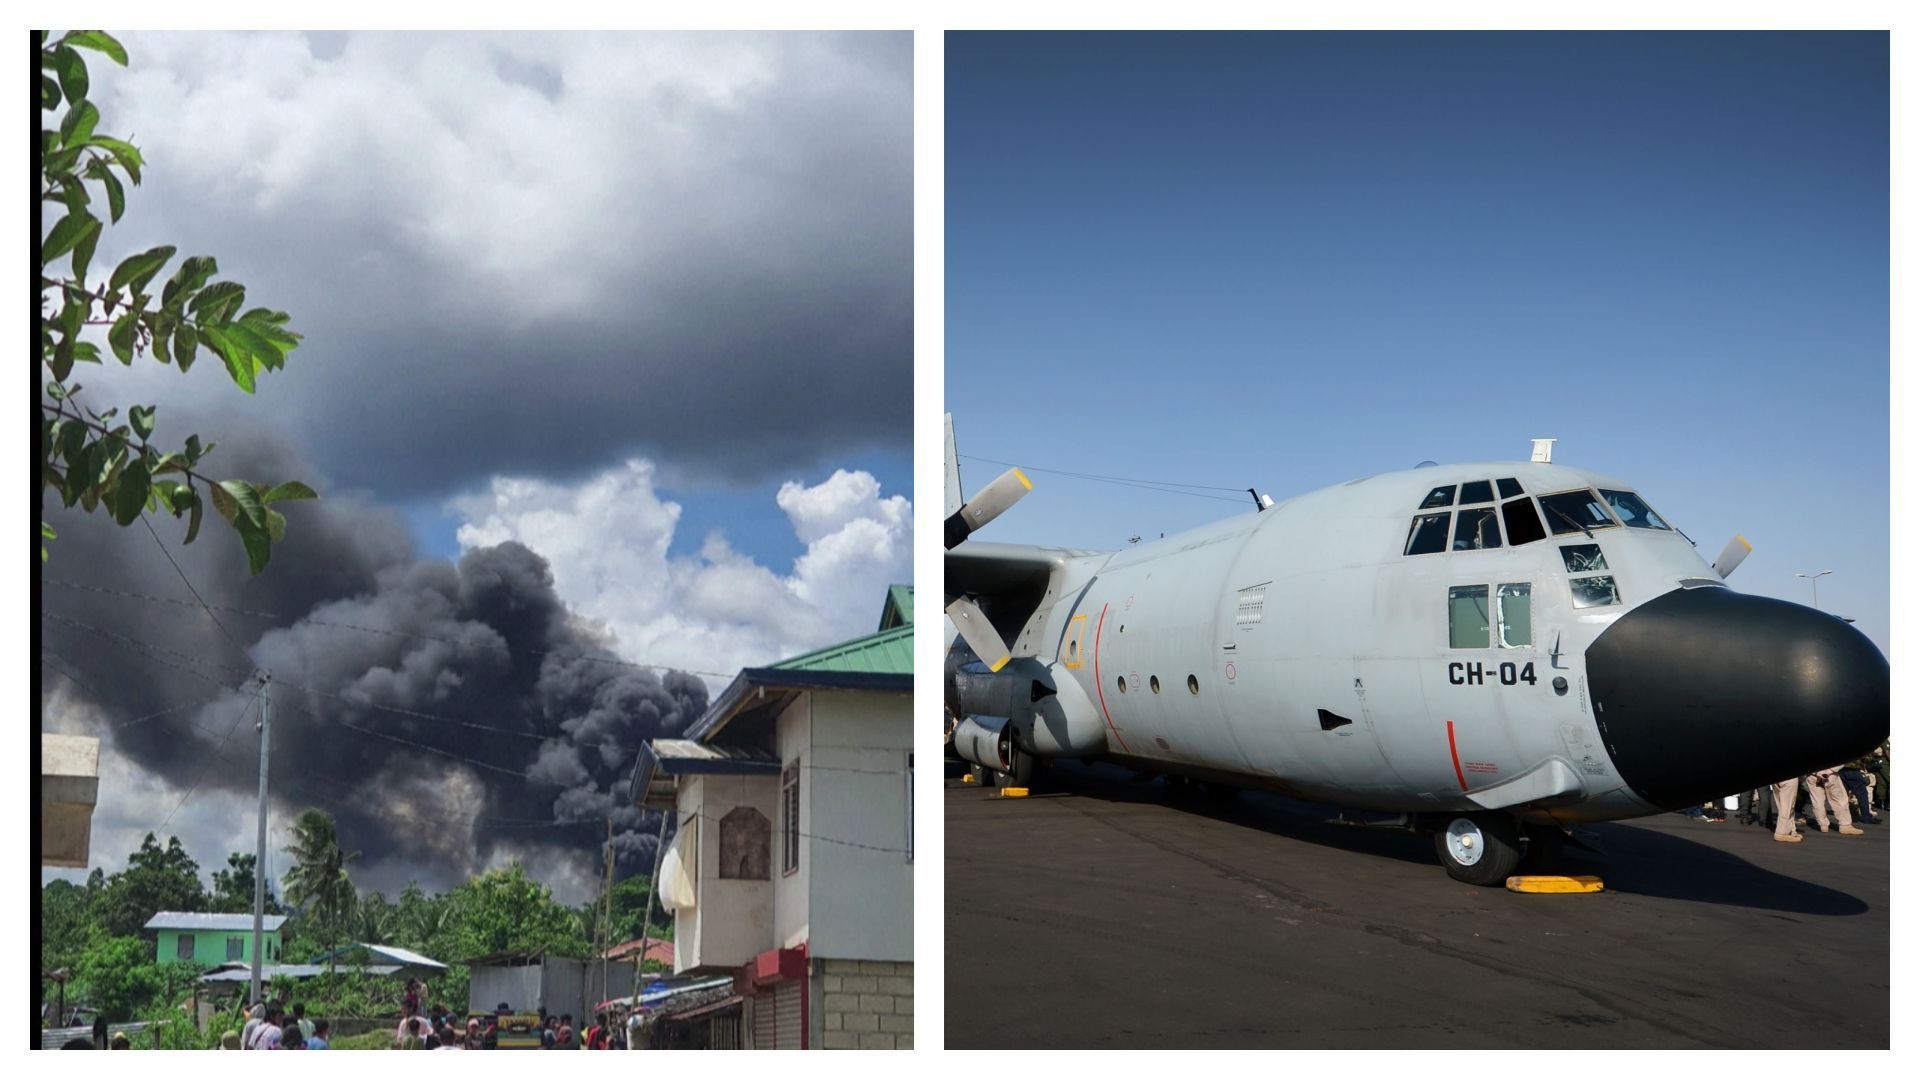 Image amateur du crash et C-130 belge à Bamako, au Mali, en 2013 (illustration)